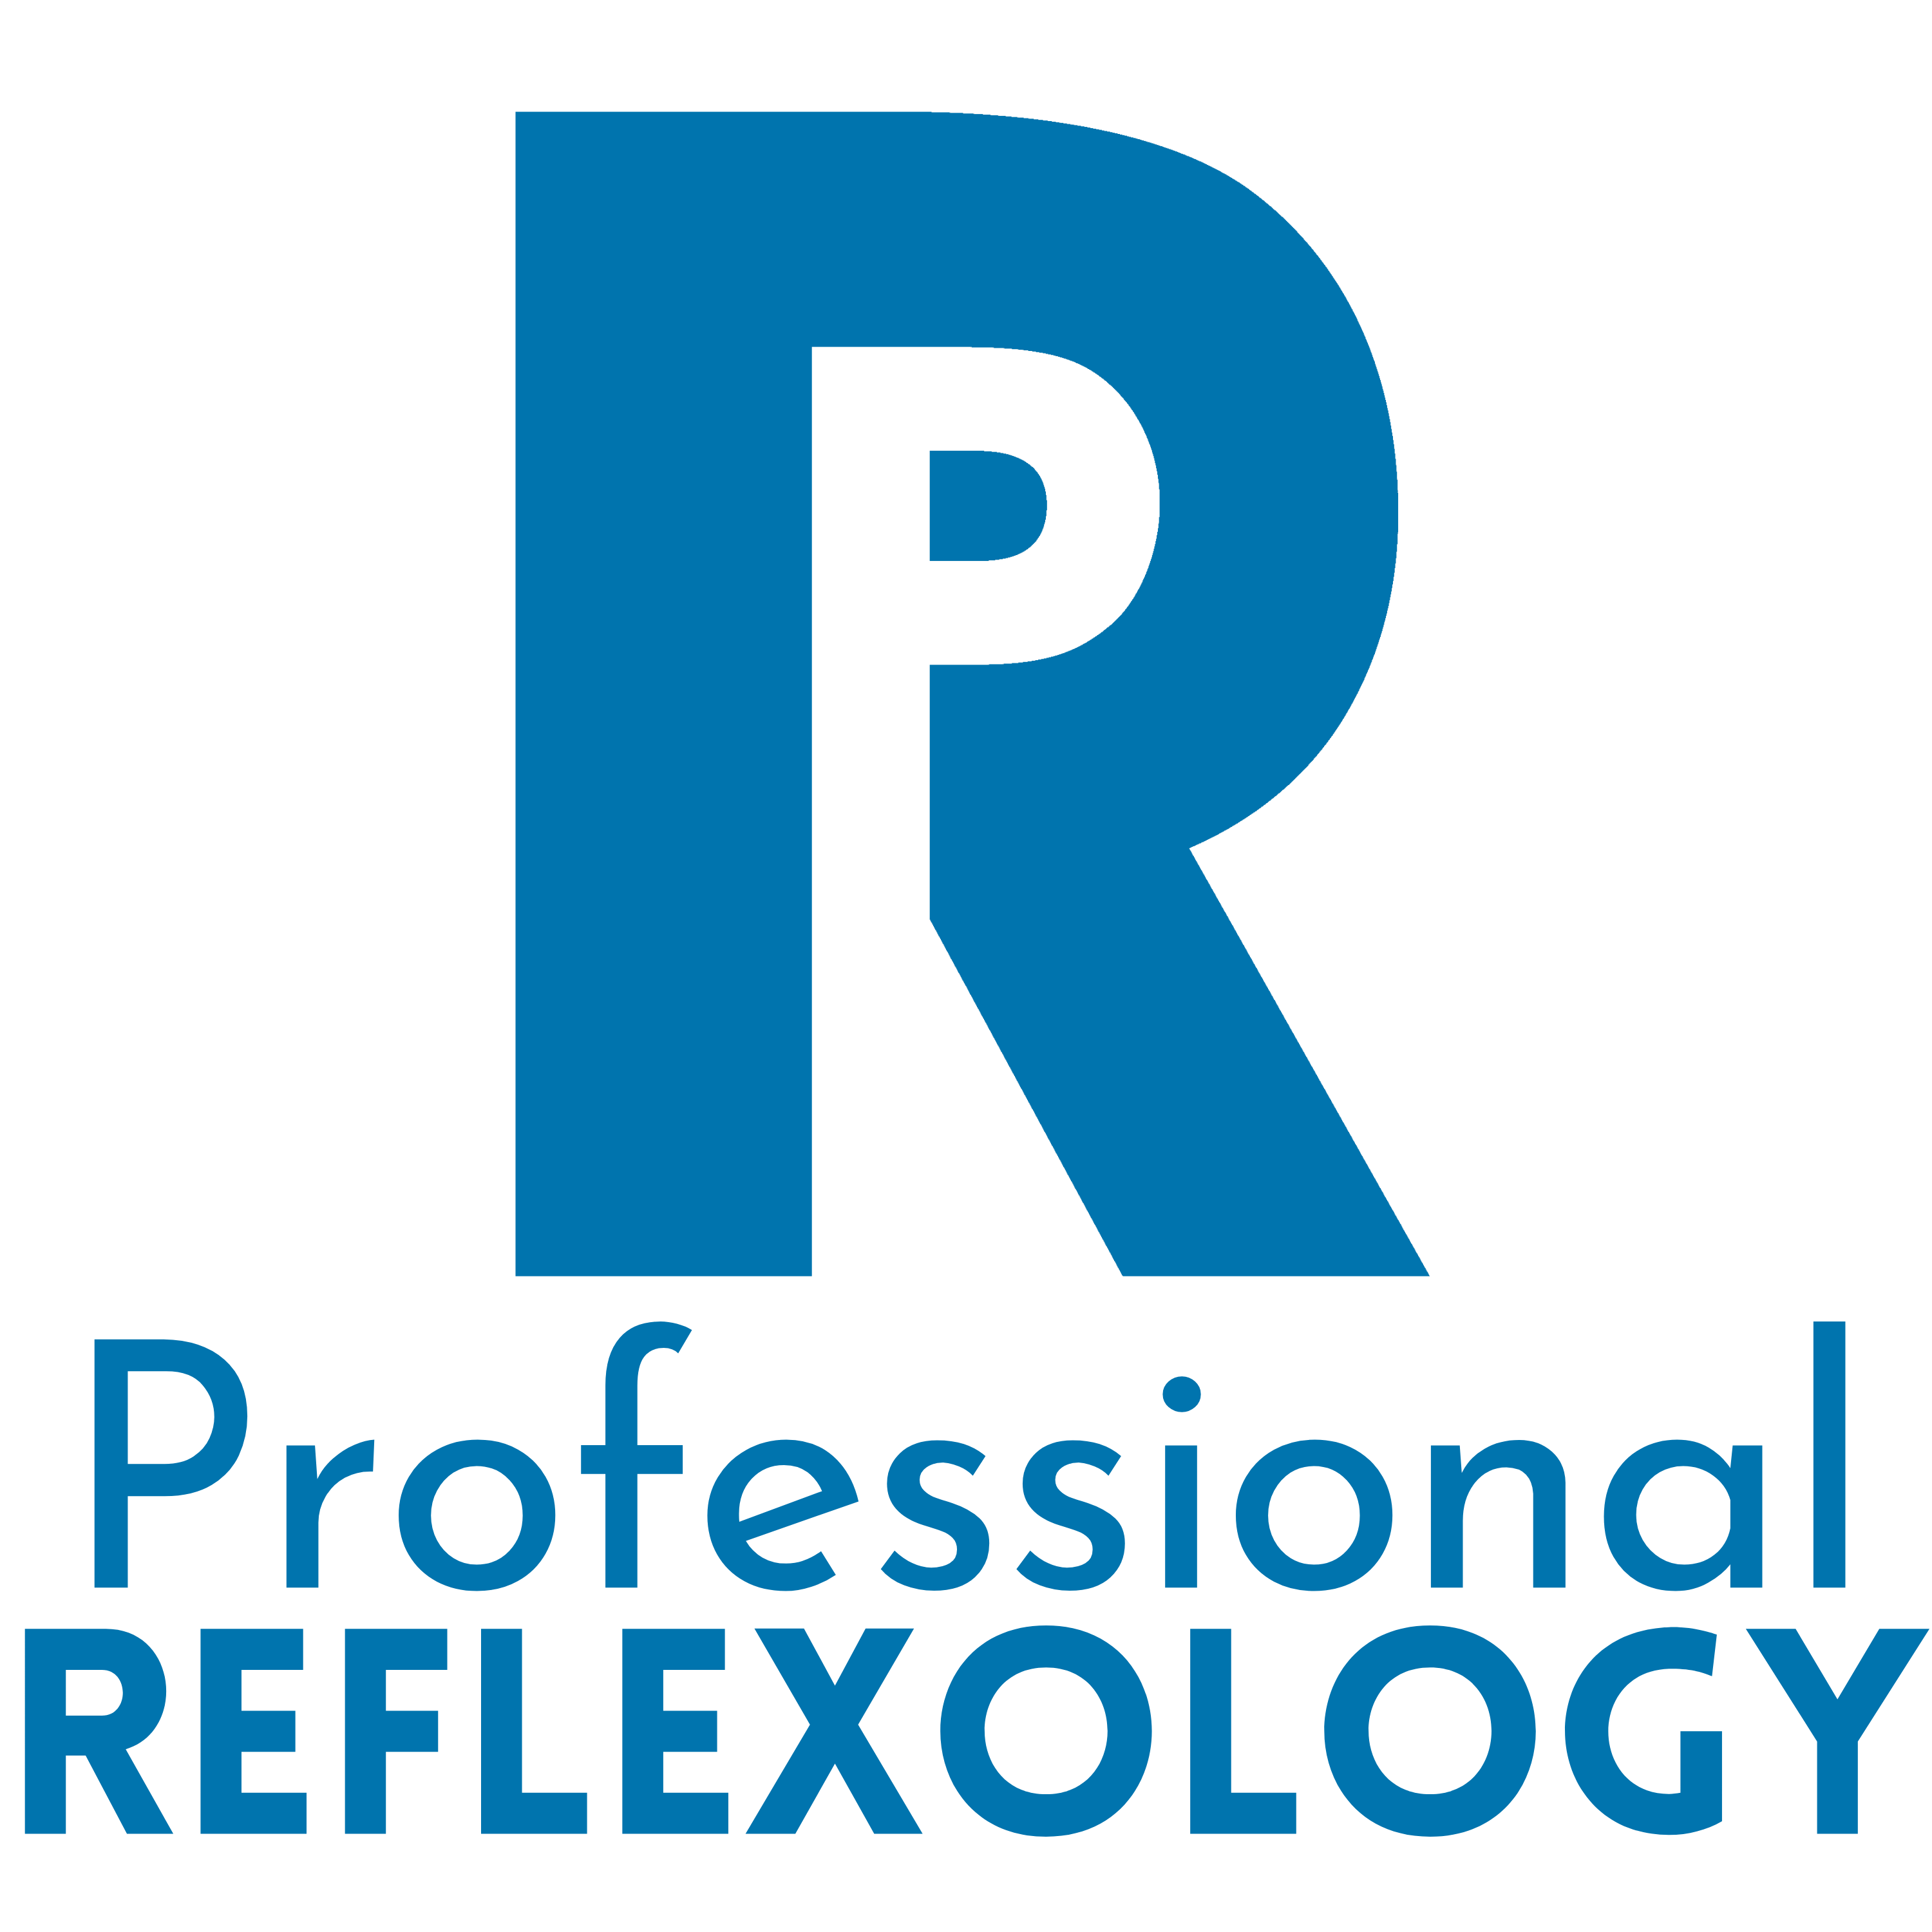 Professional reflexology